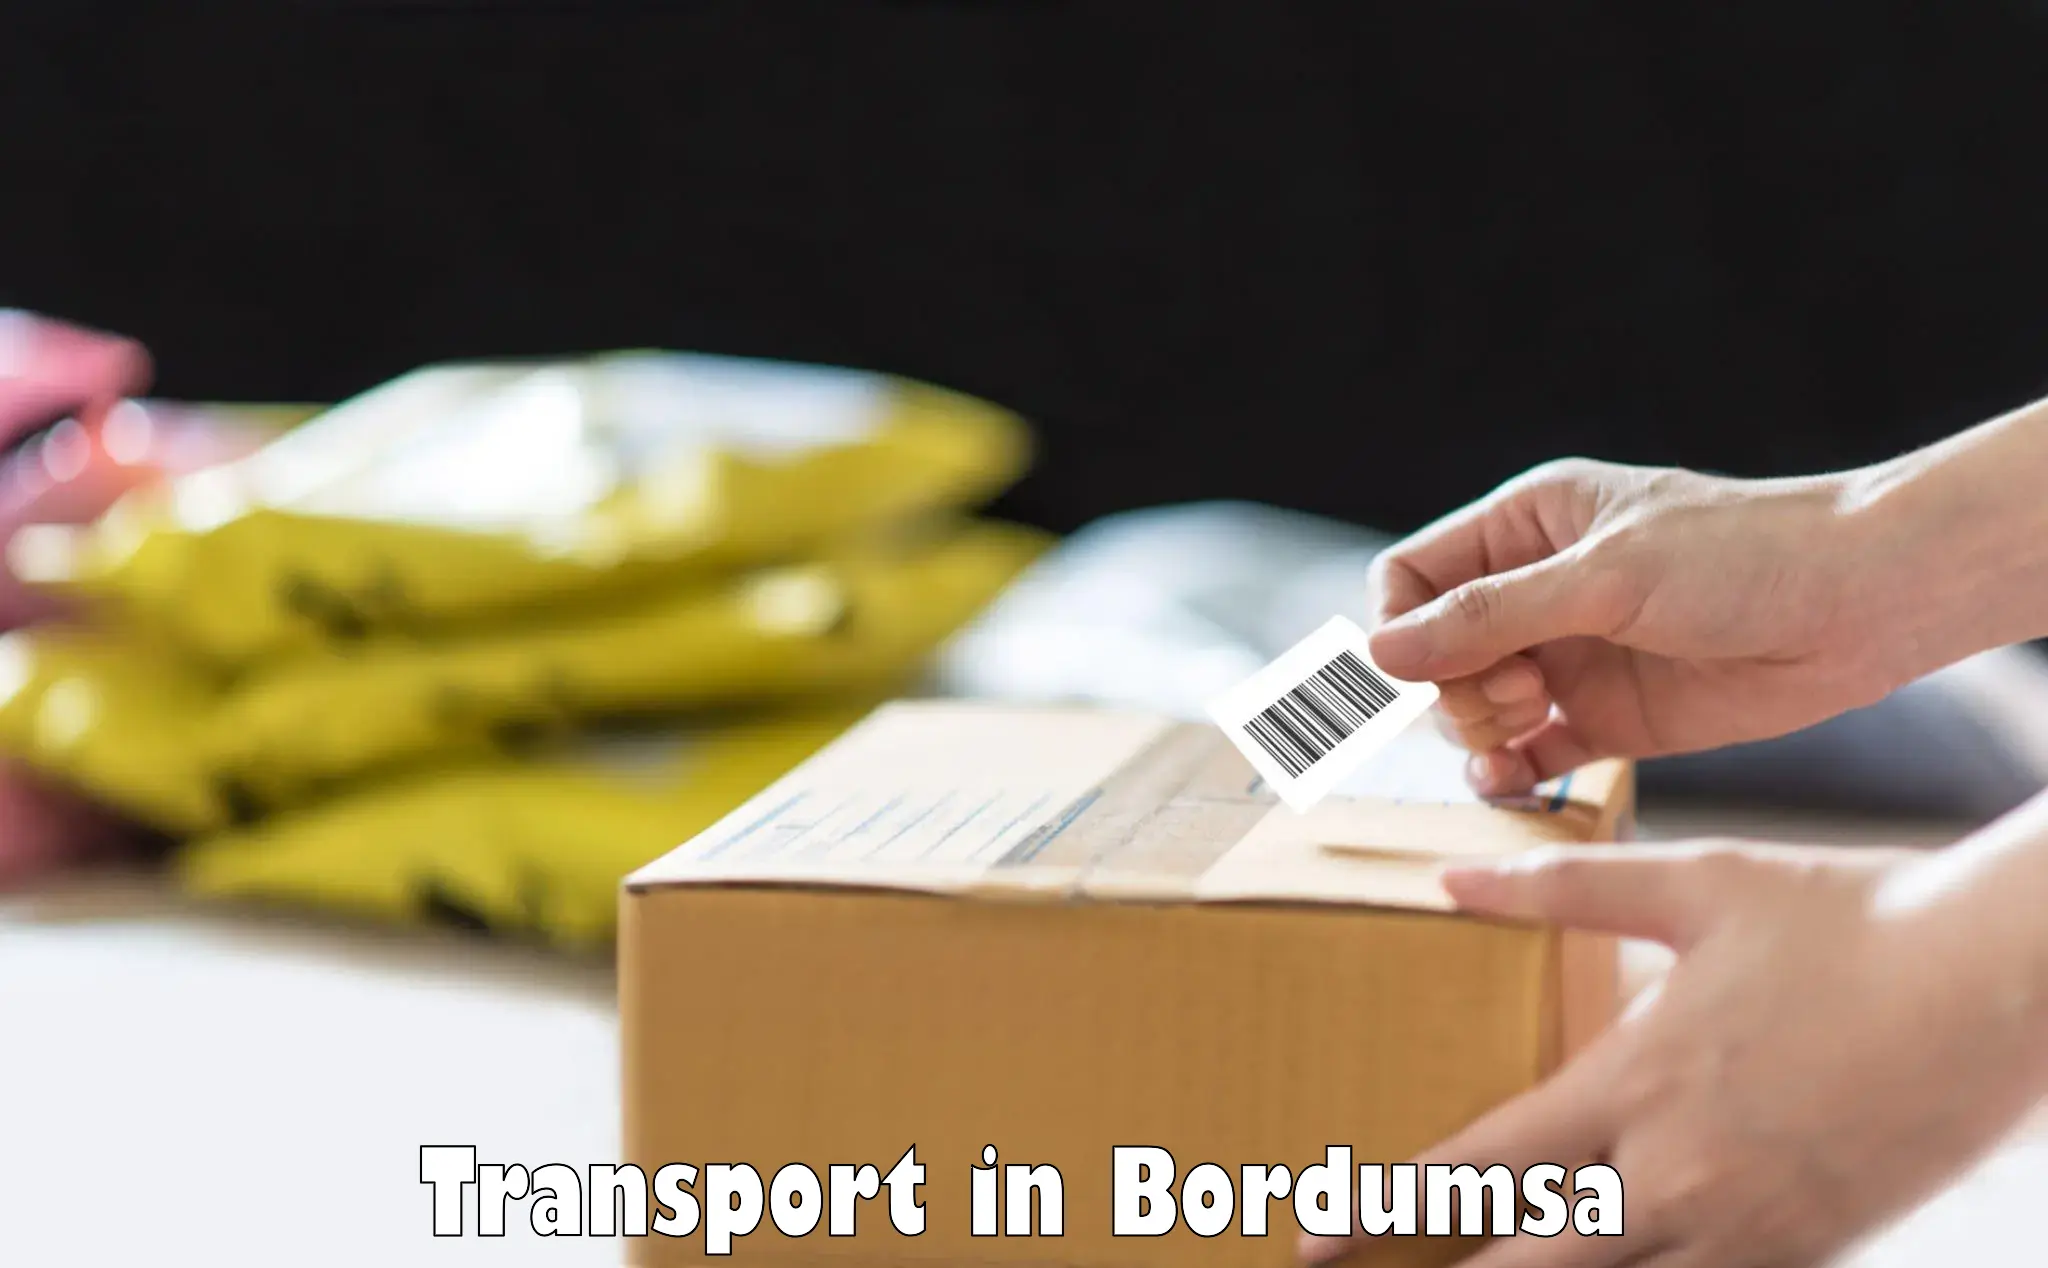 Online transport in Bordumsa